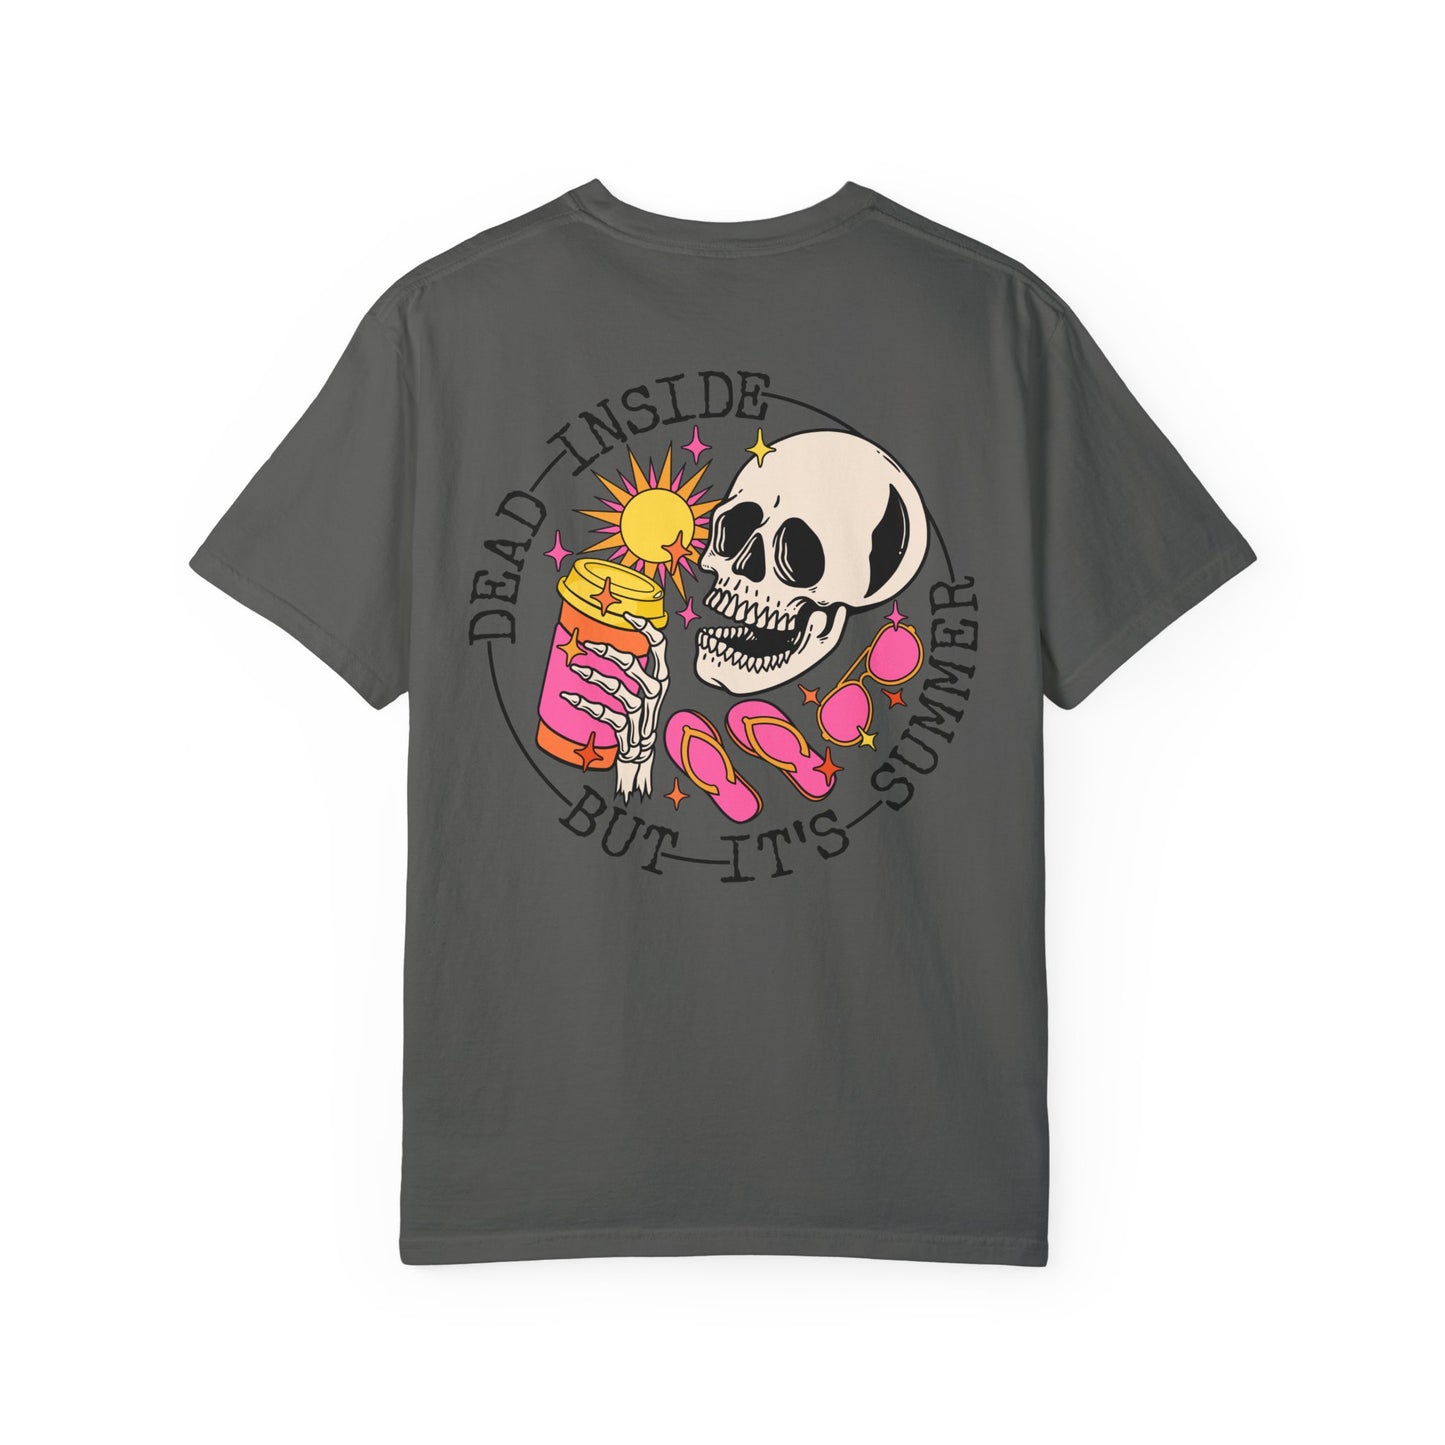 Dead Inside But It's Summer - Comfort Colors T-shirt